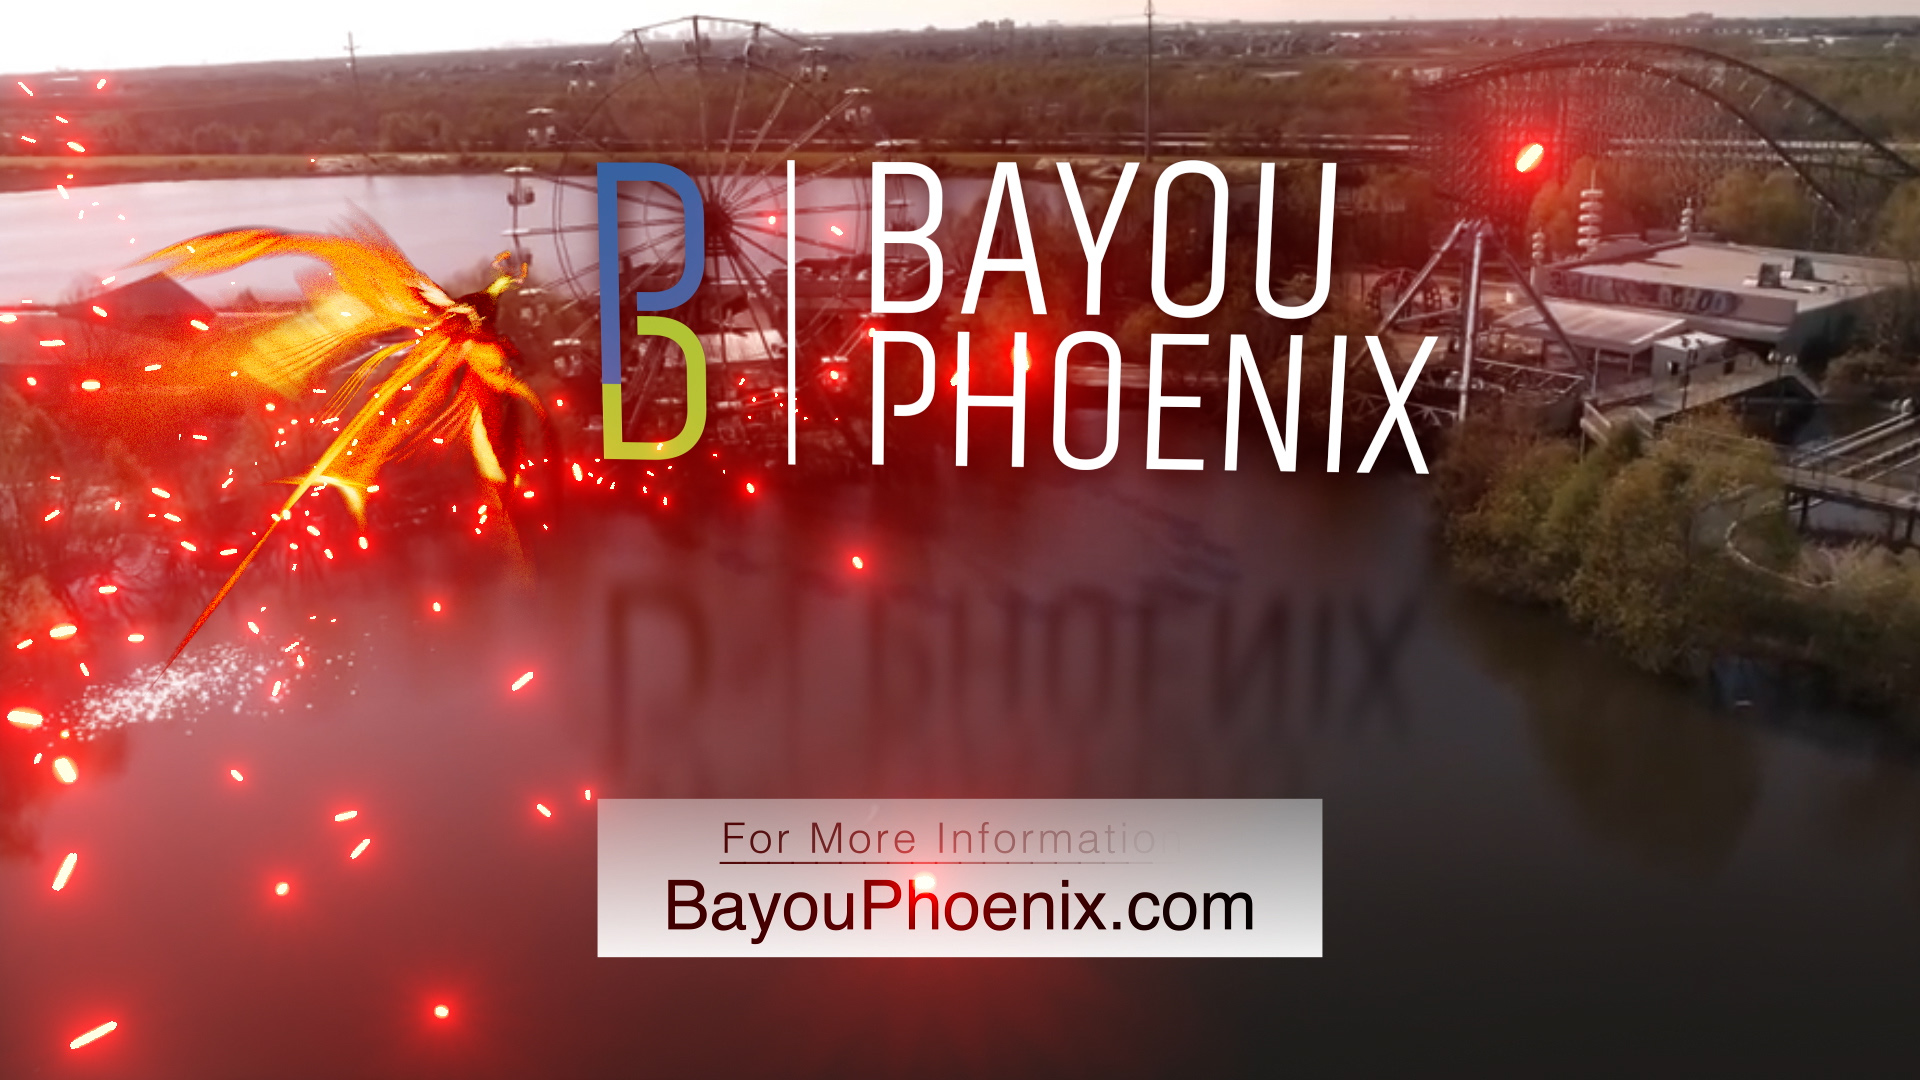 Bayou Phoenix: Winning RFP to redevelop 6 Flags